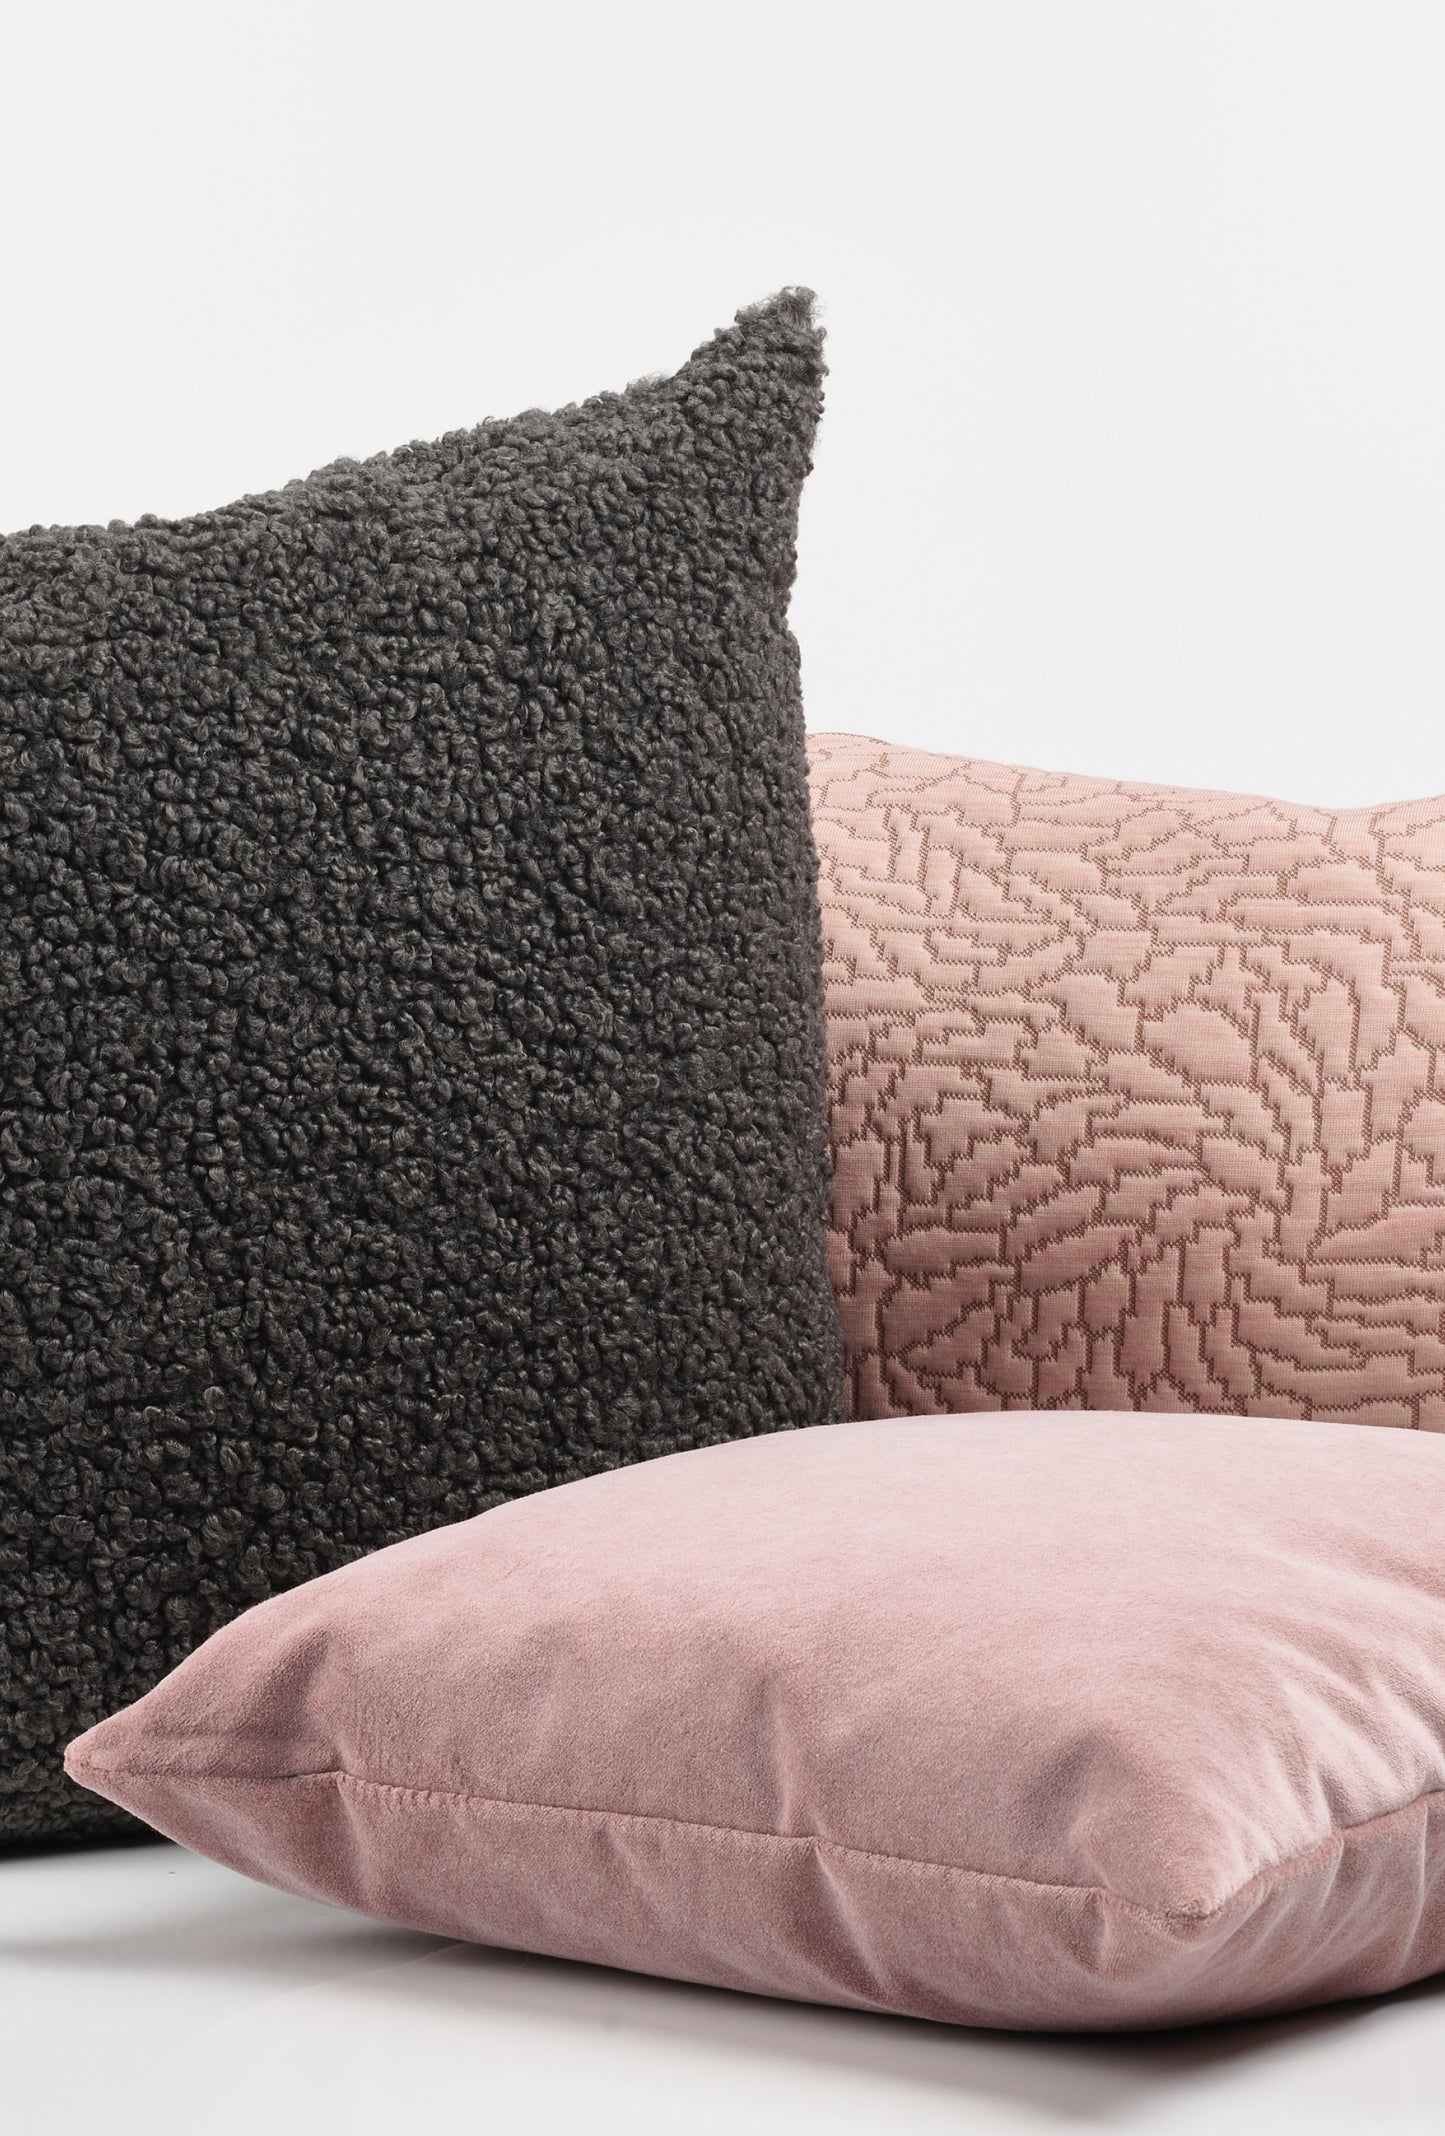 JOY Decorative cushion with fake fur and brushed cotton - Dark Grey (50x50)